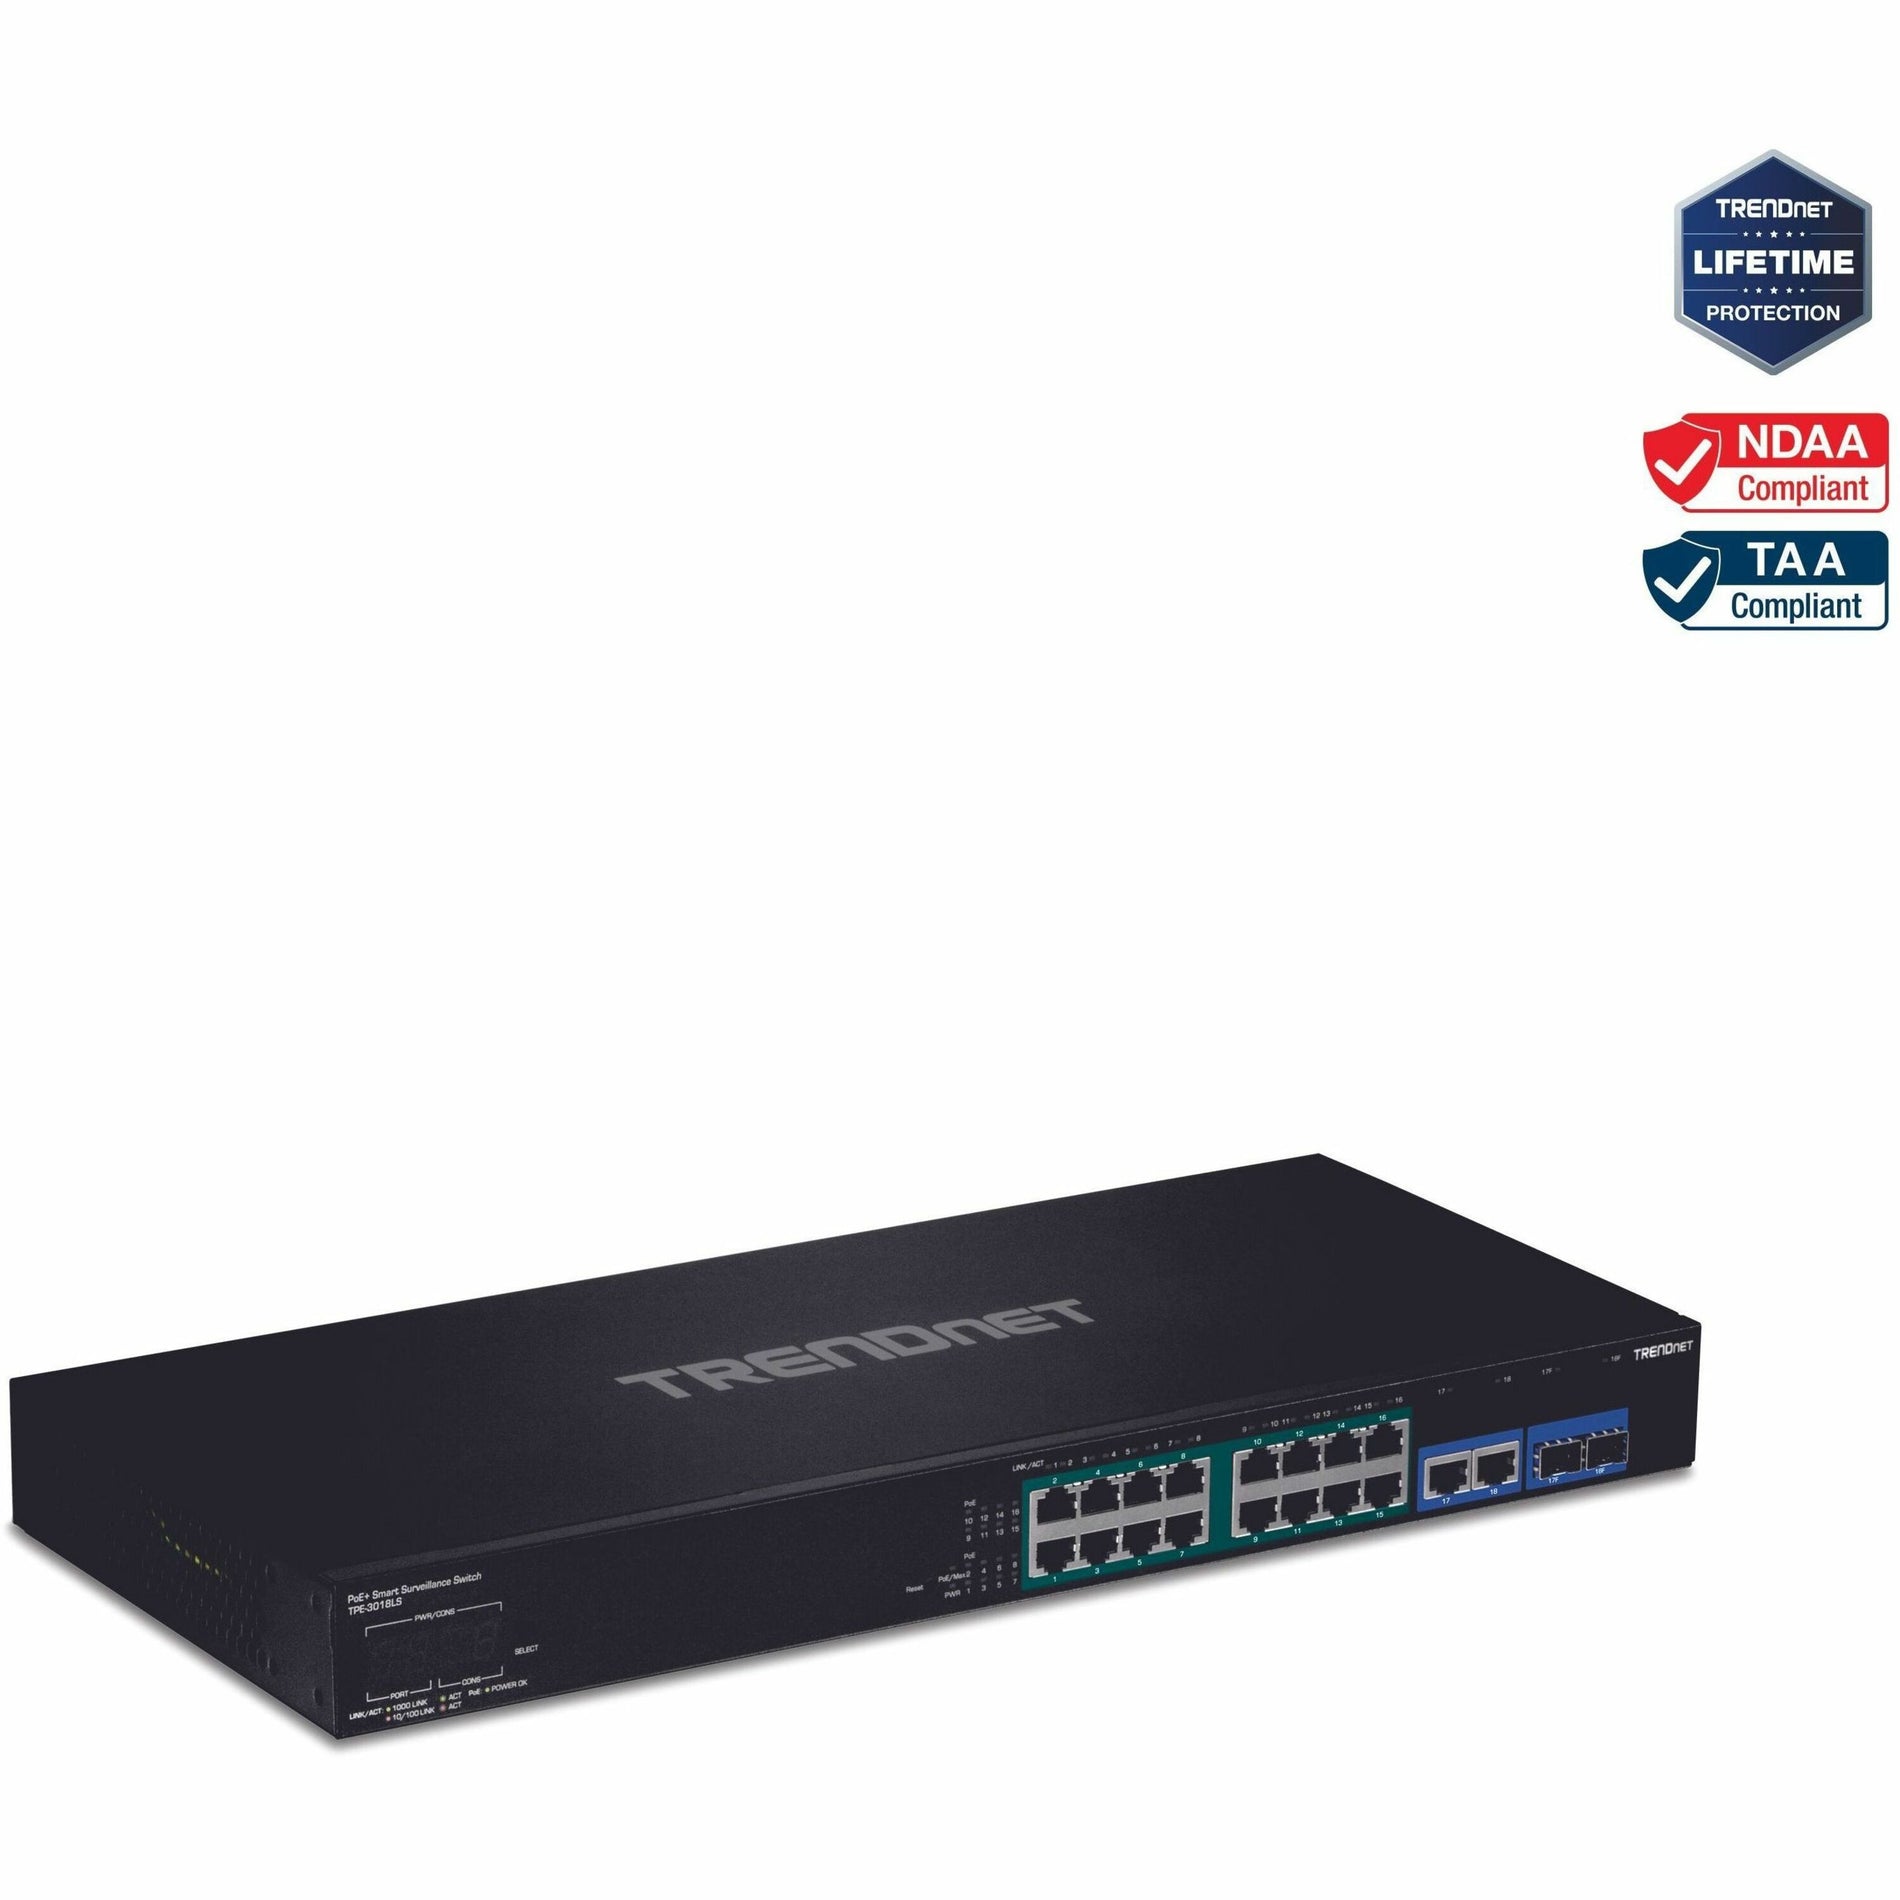 TRENDnet TPE-3018LS 18-Port Gigabit PoE+ Smart Surveillance Switch, 16 x Gigabit PoE+ Ports, 2 x Shared Gigabit Ports (RJ-45 or SFP), 220W PoE Budget, Long Range PoE+, VLAN, QoS, LACP, ONVIF